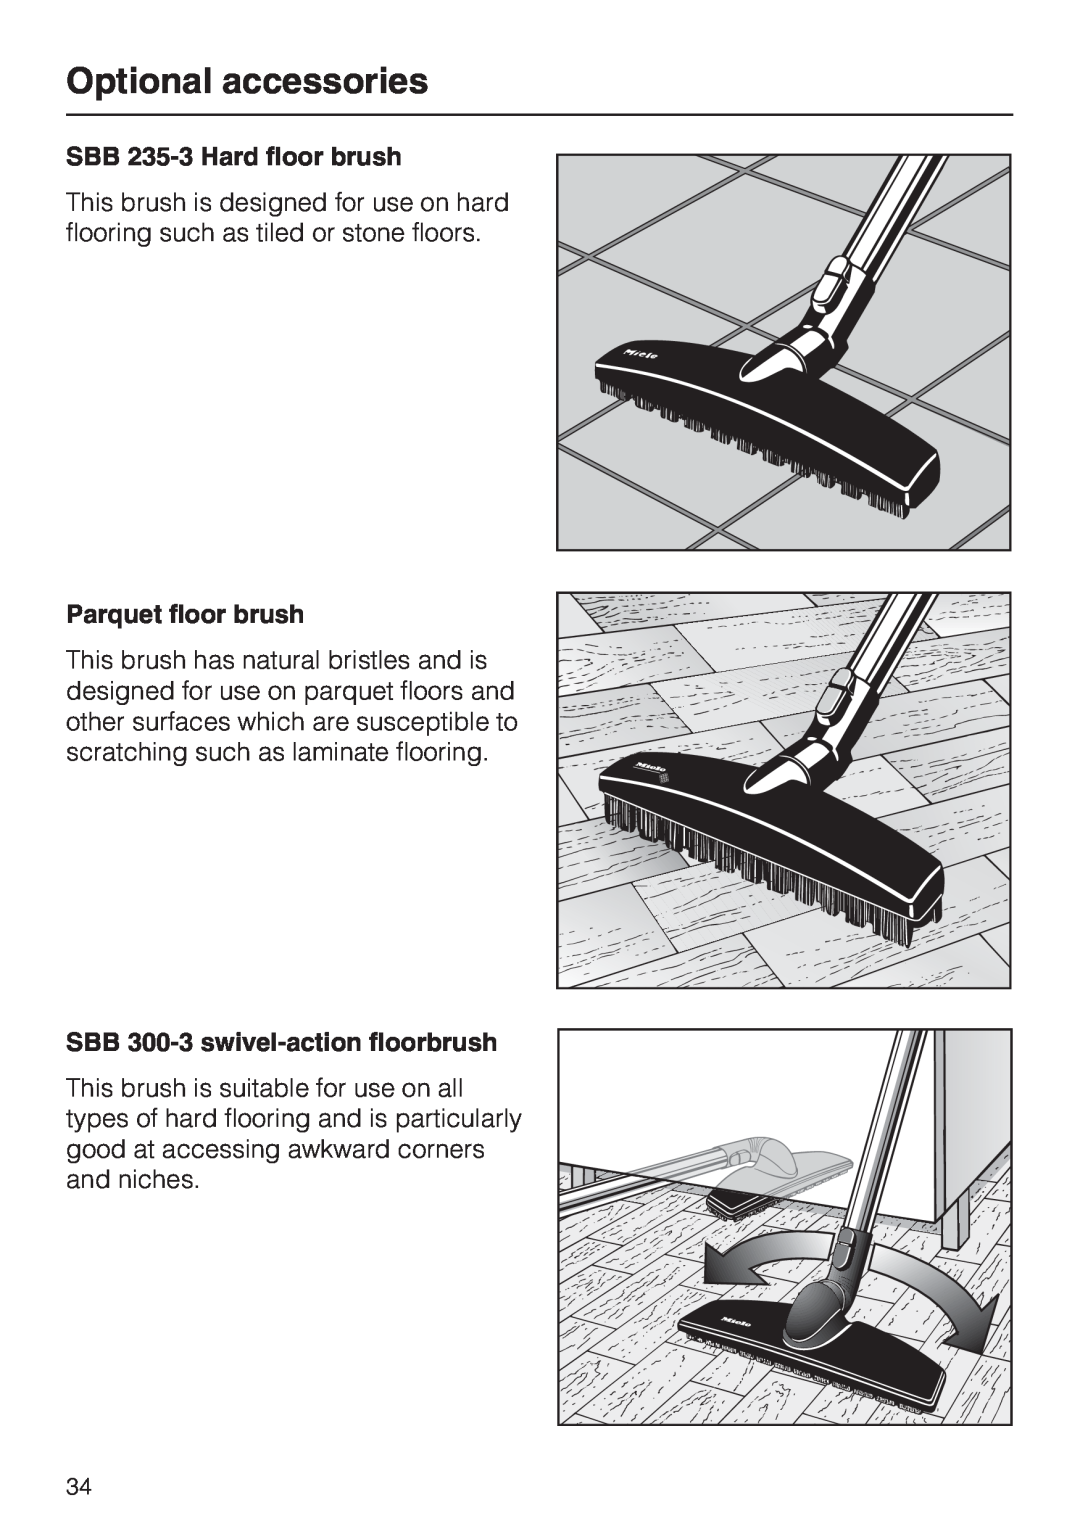 Miele S 4000 Series manual Optional accessories, SBB 235-3Hard floor brush, Parquet floor brush 